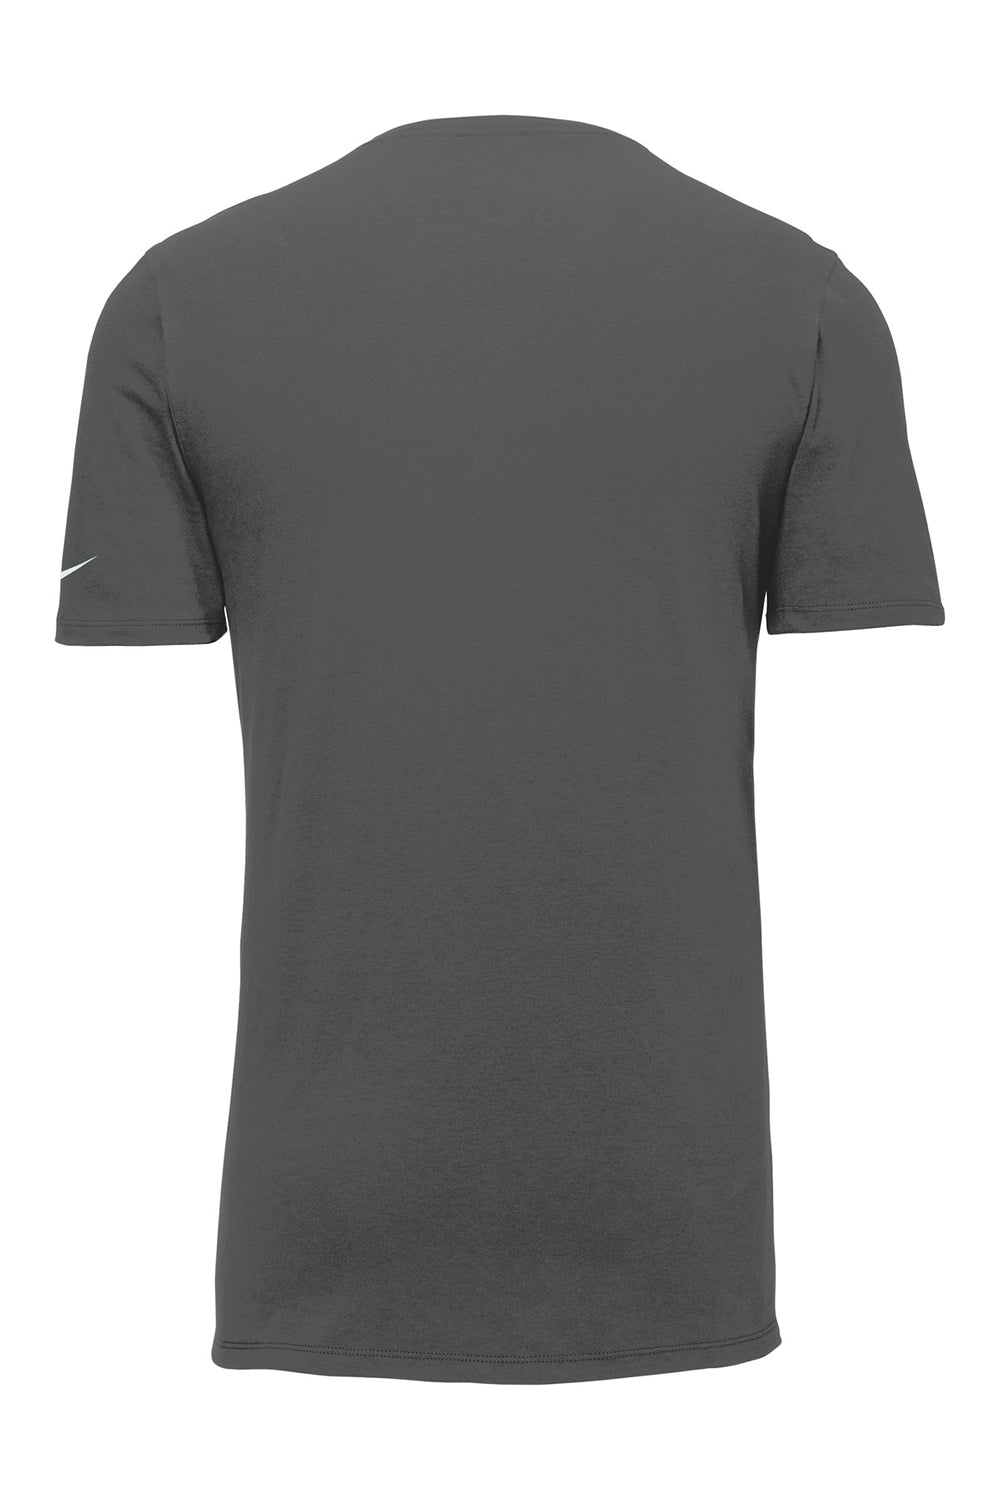 Nike NKBQ5231 Mens Dri-Fit Moisture Wicking Short Sleeve Crewneck T-Shirt Anthracite Grey Flat Back